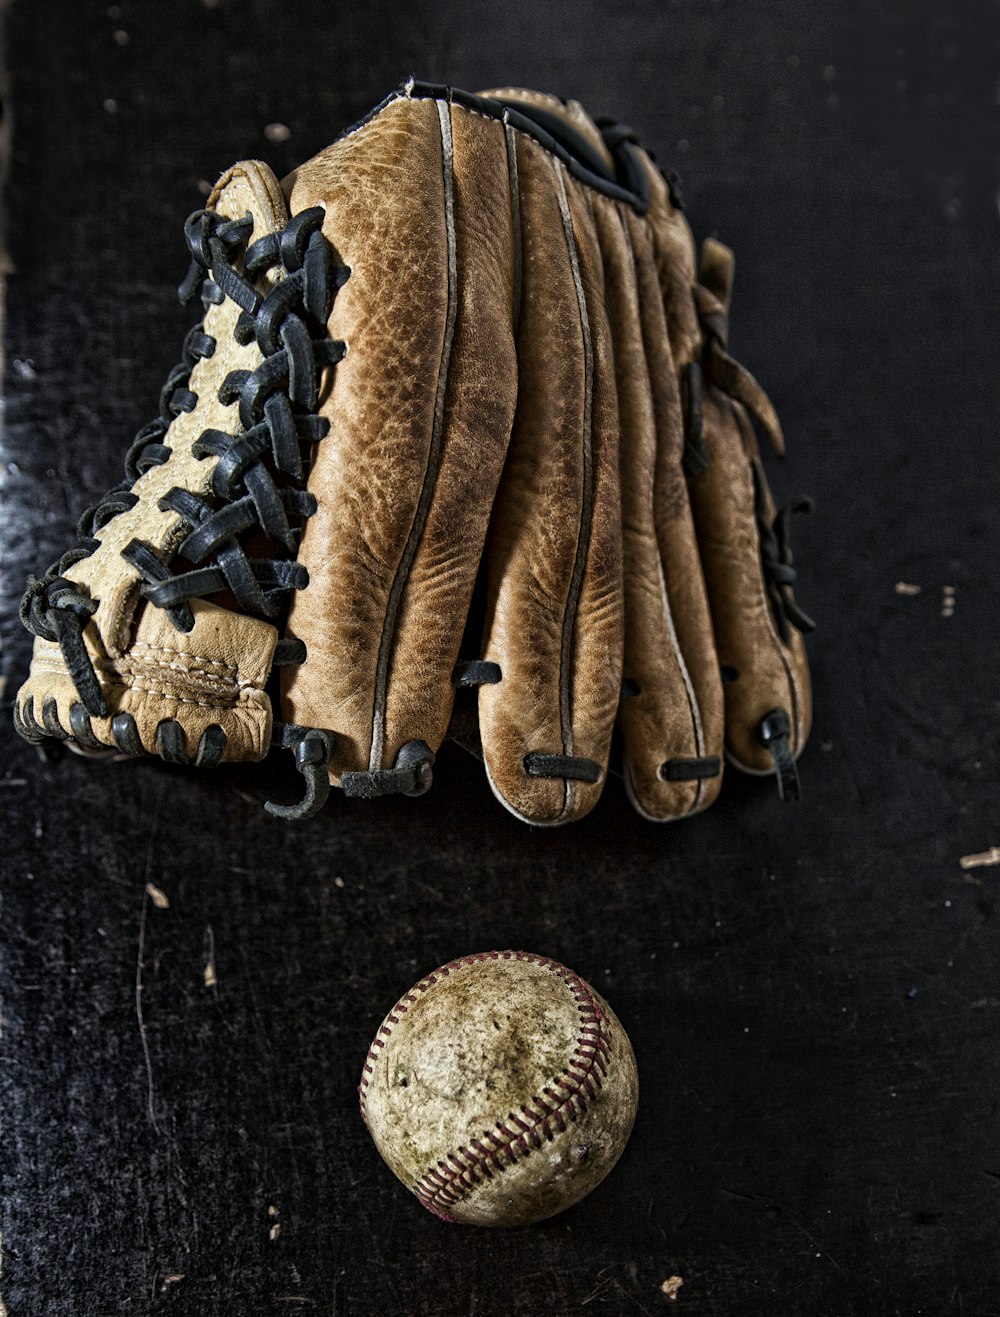 brown baseball mitt on black textile